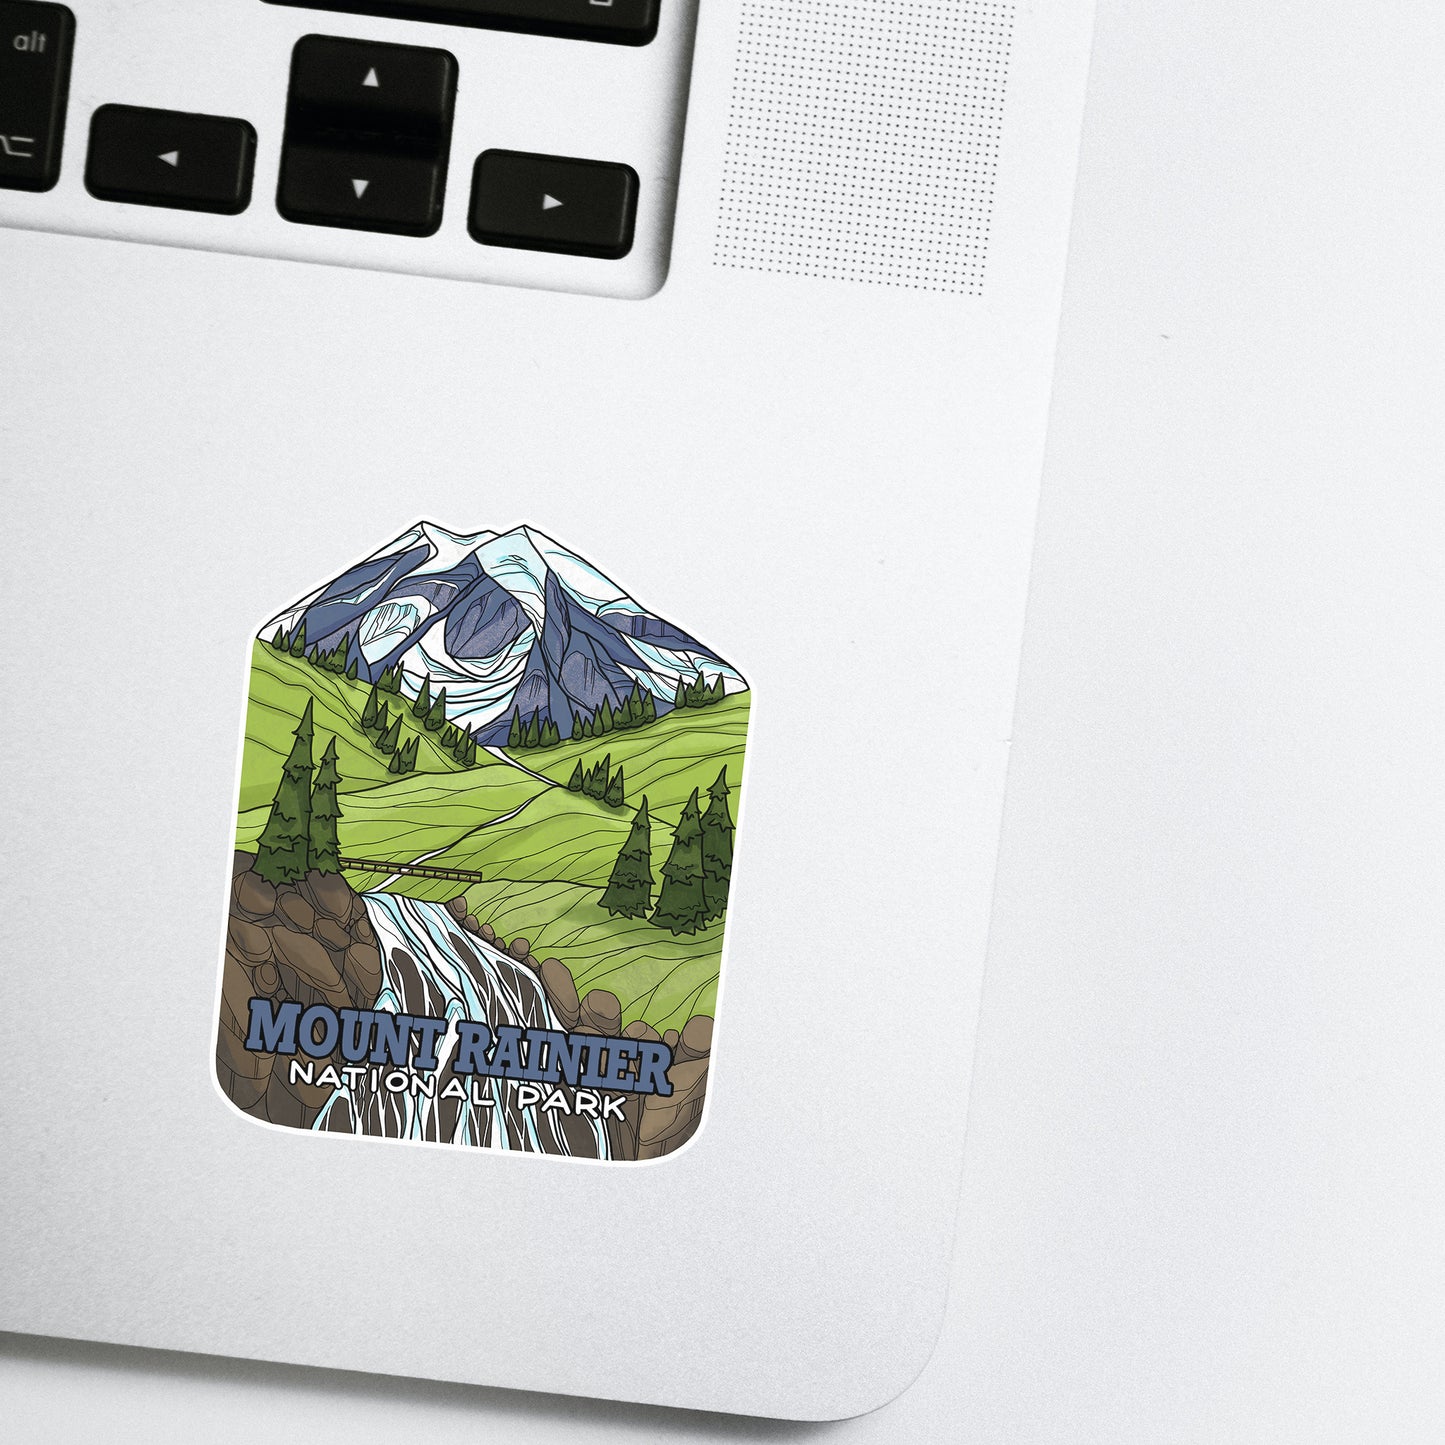 Mount Rainier National Park sticker